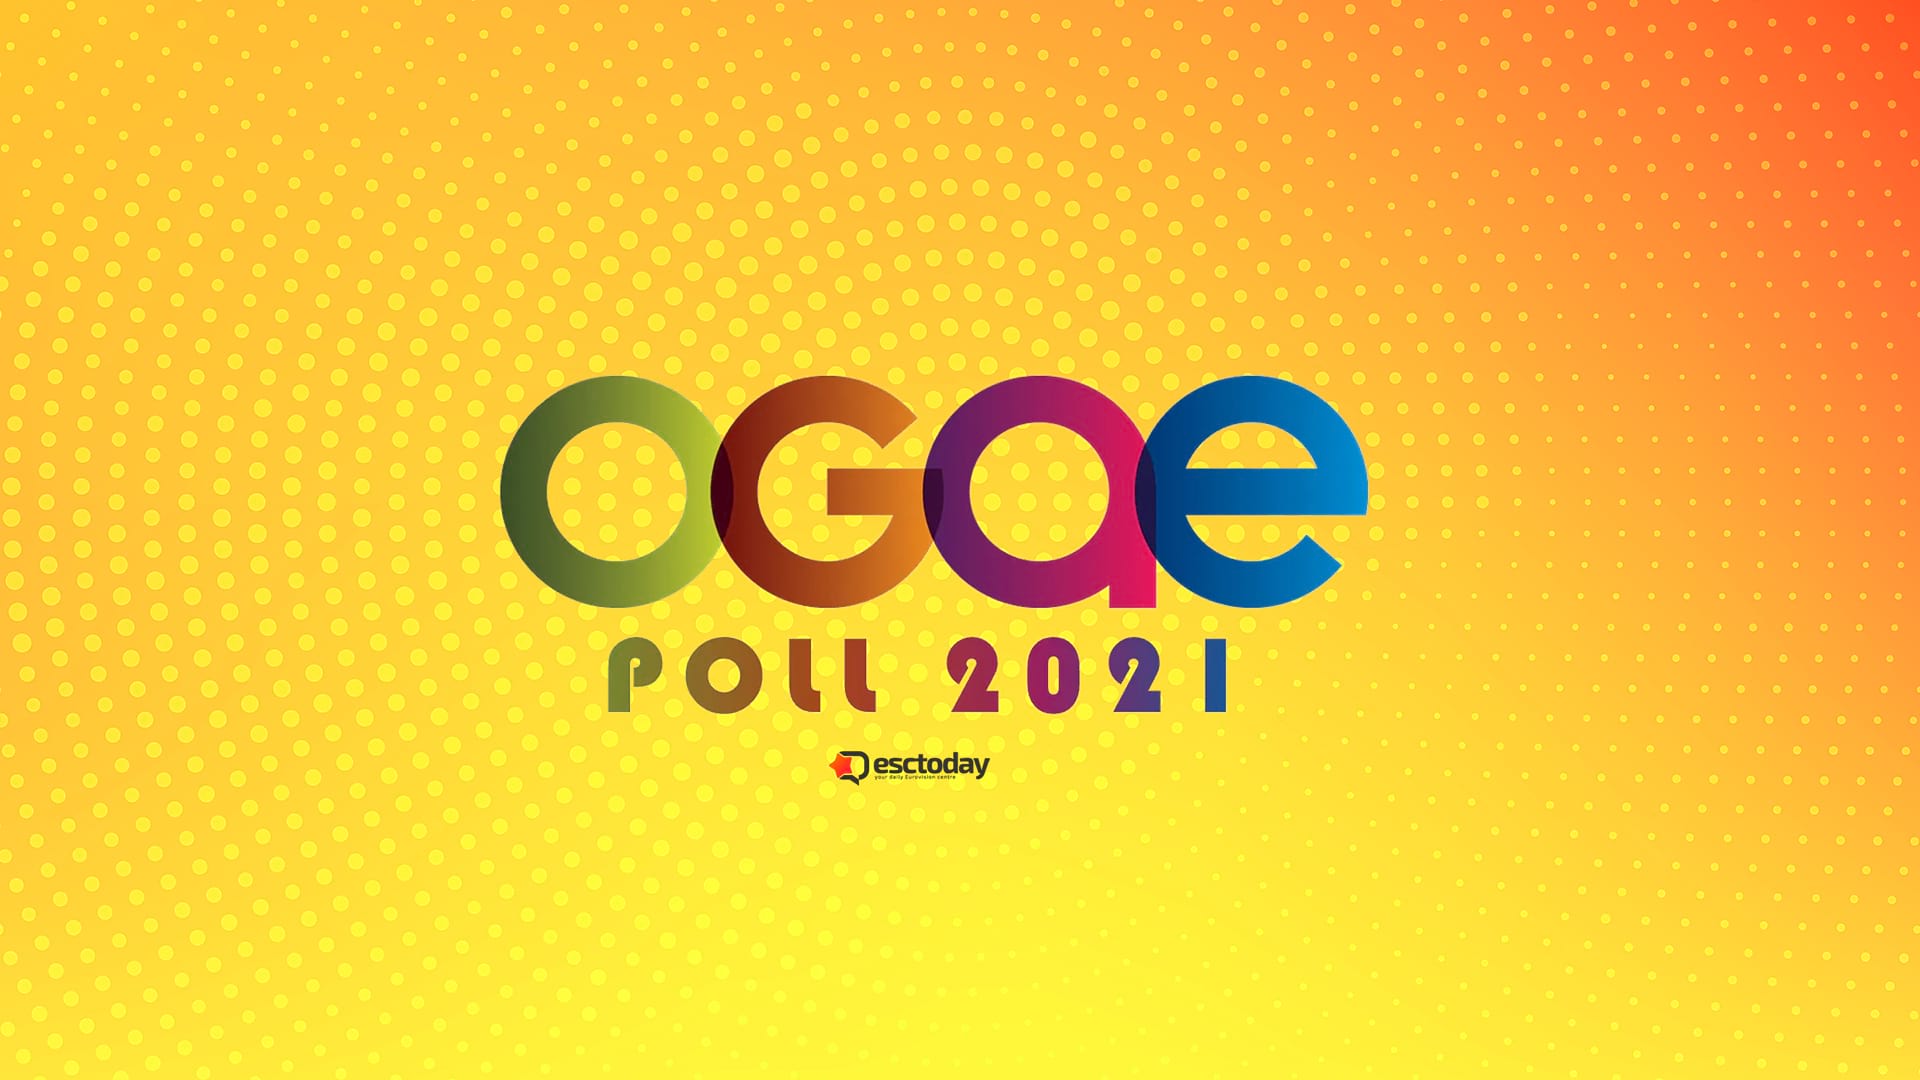 Sondaggio Eurovision OGAE 2021: ecco i voti di OGAE France